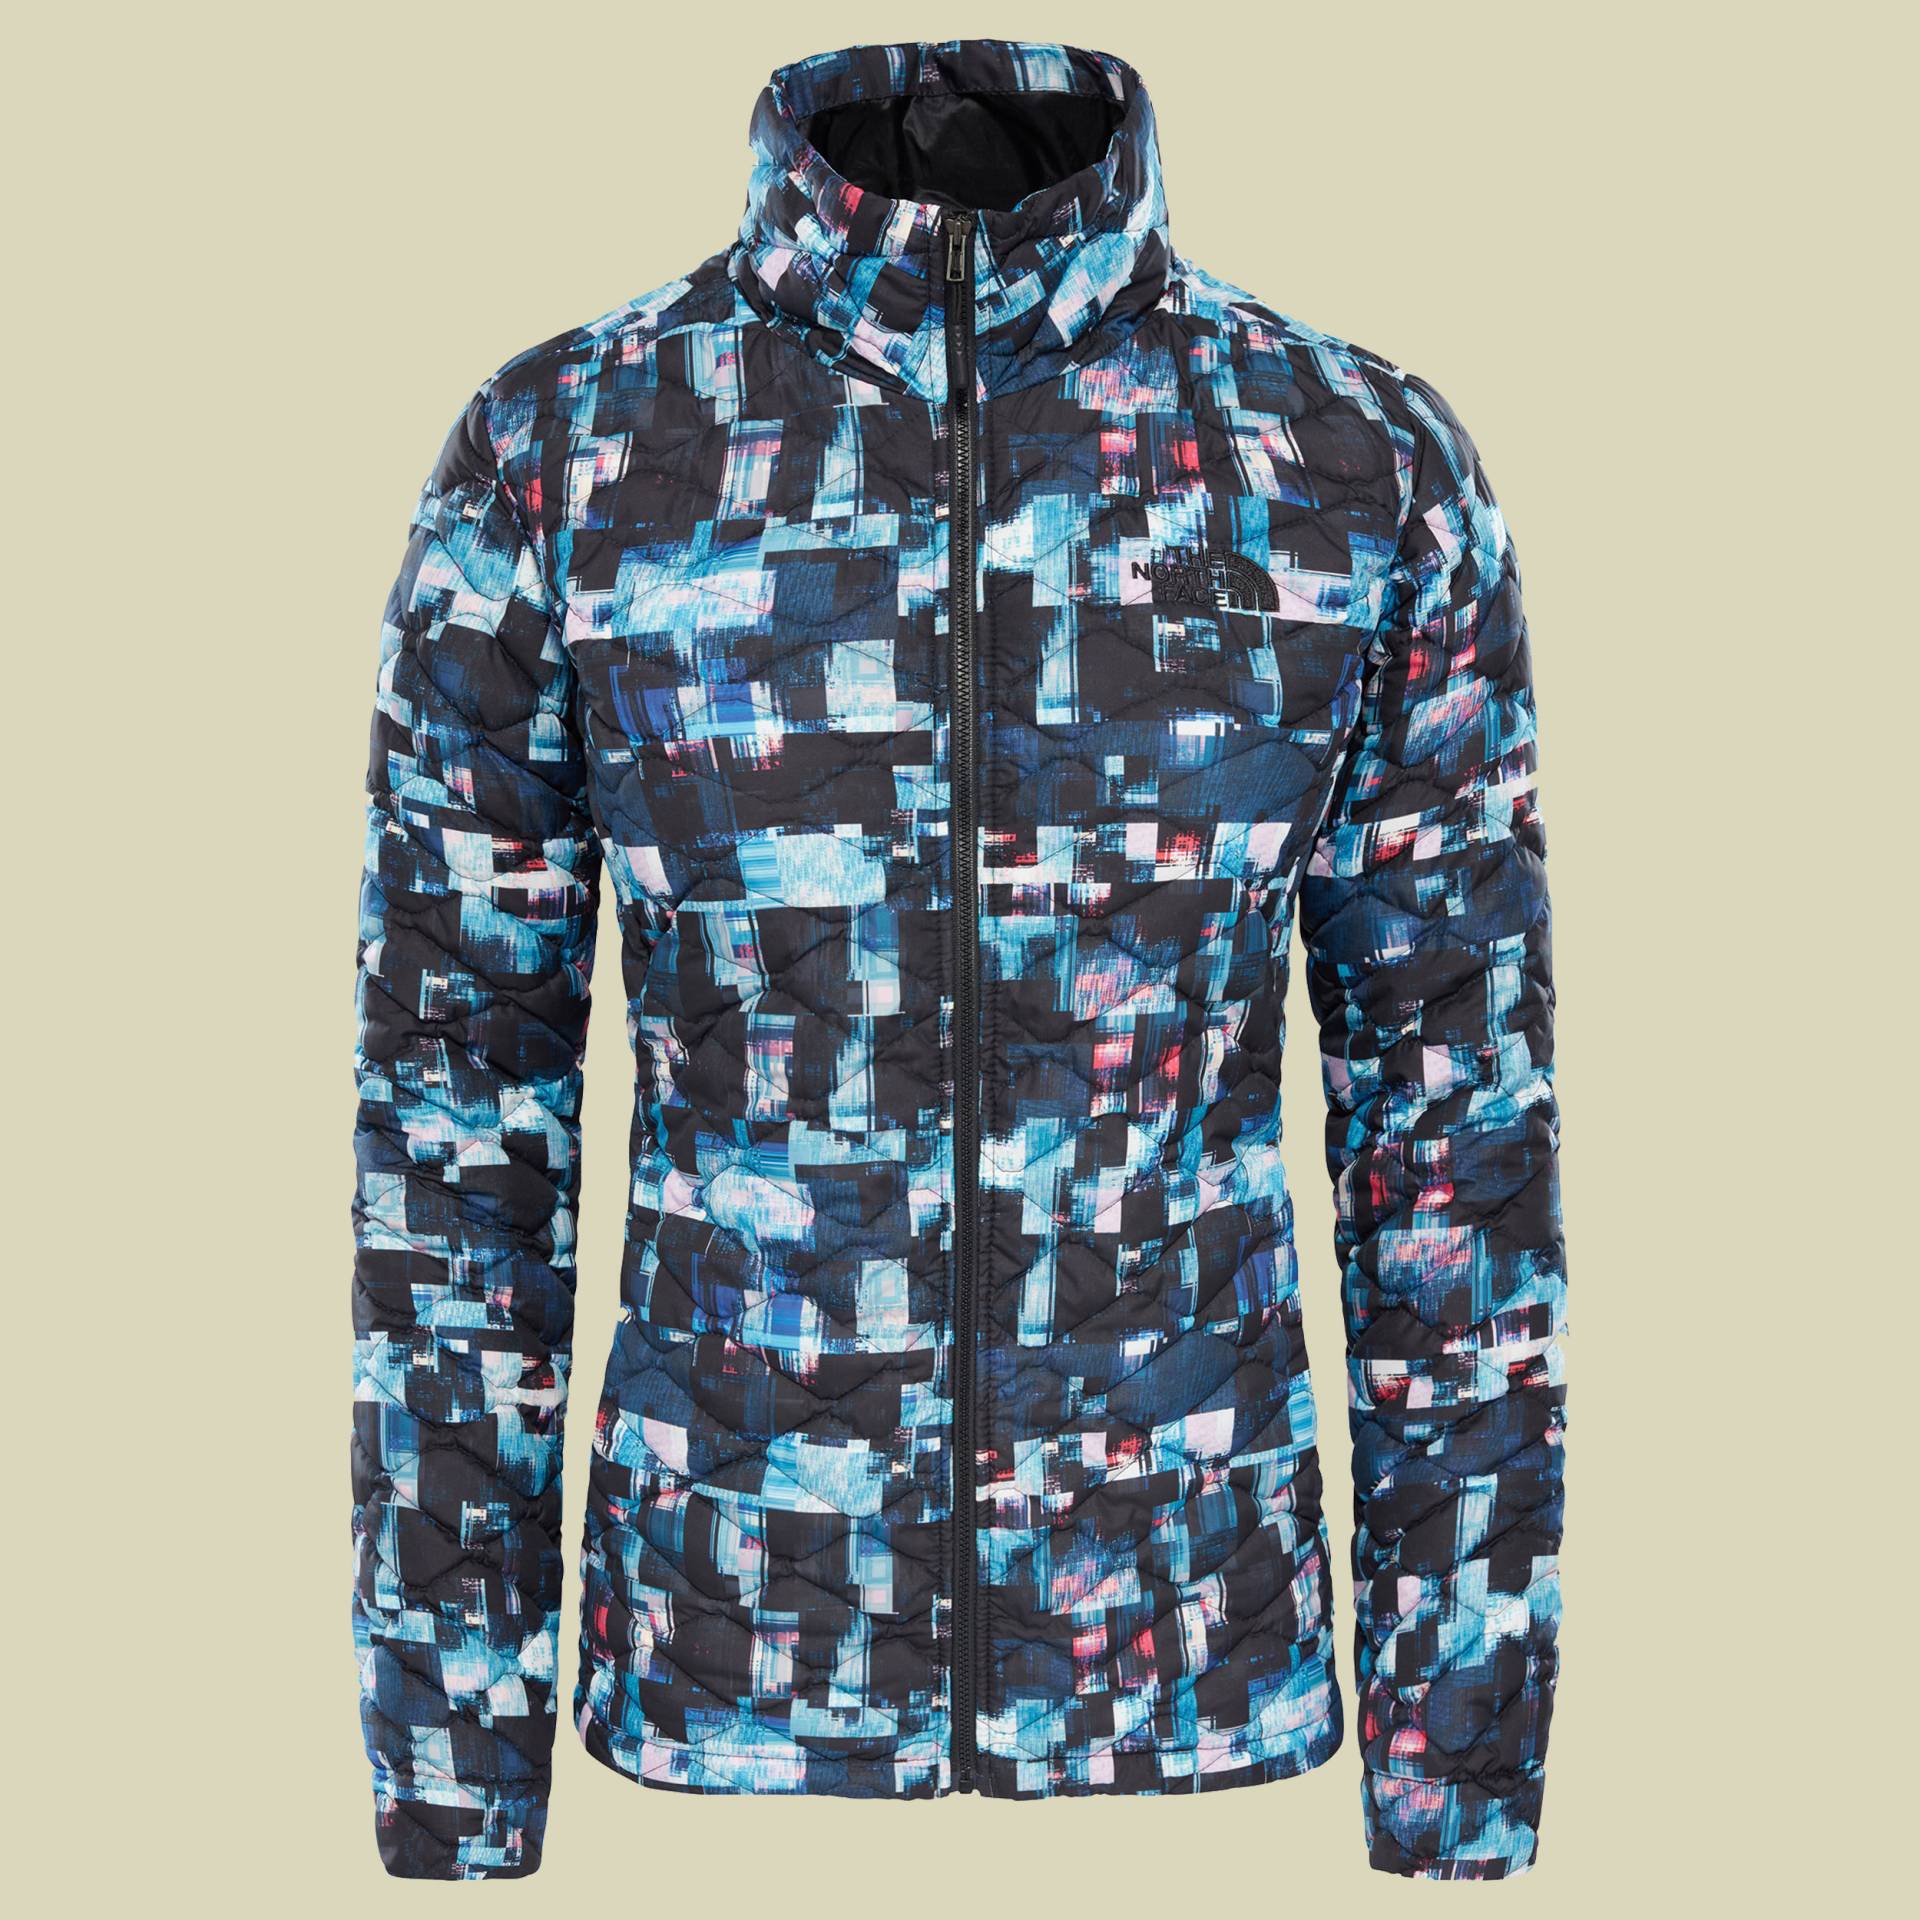 Thermoball Jacket Women Größe S Farbe multi glitch print von The North Face